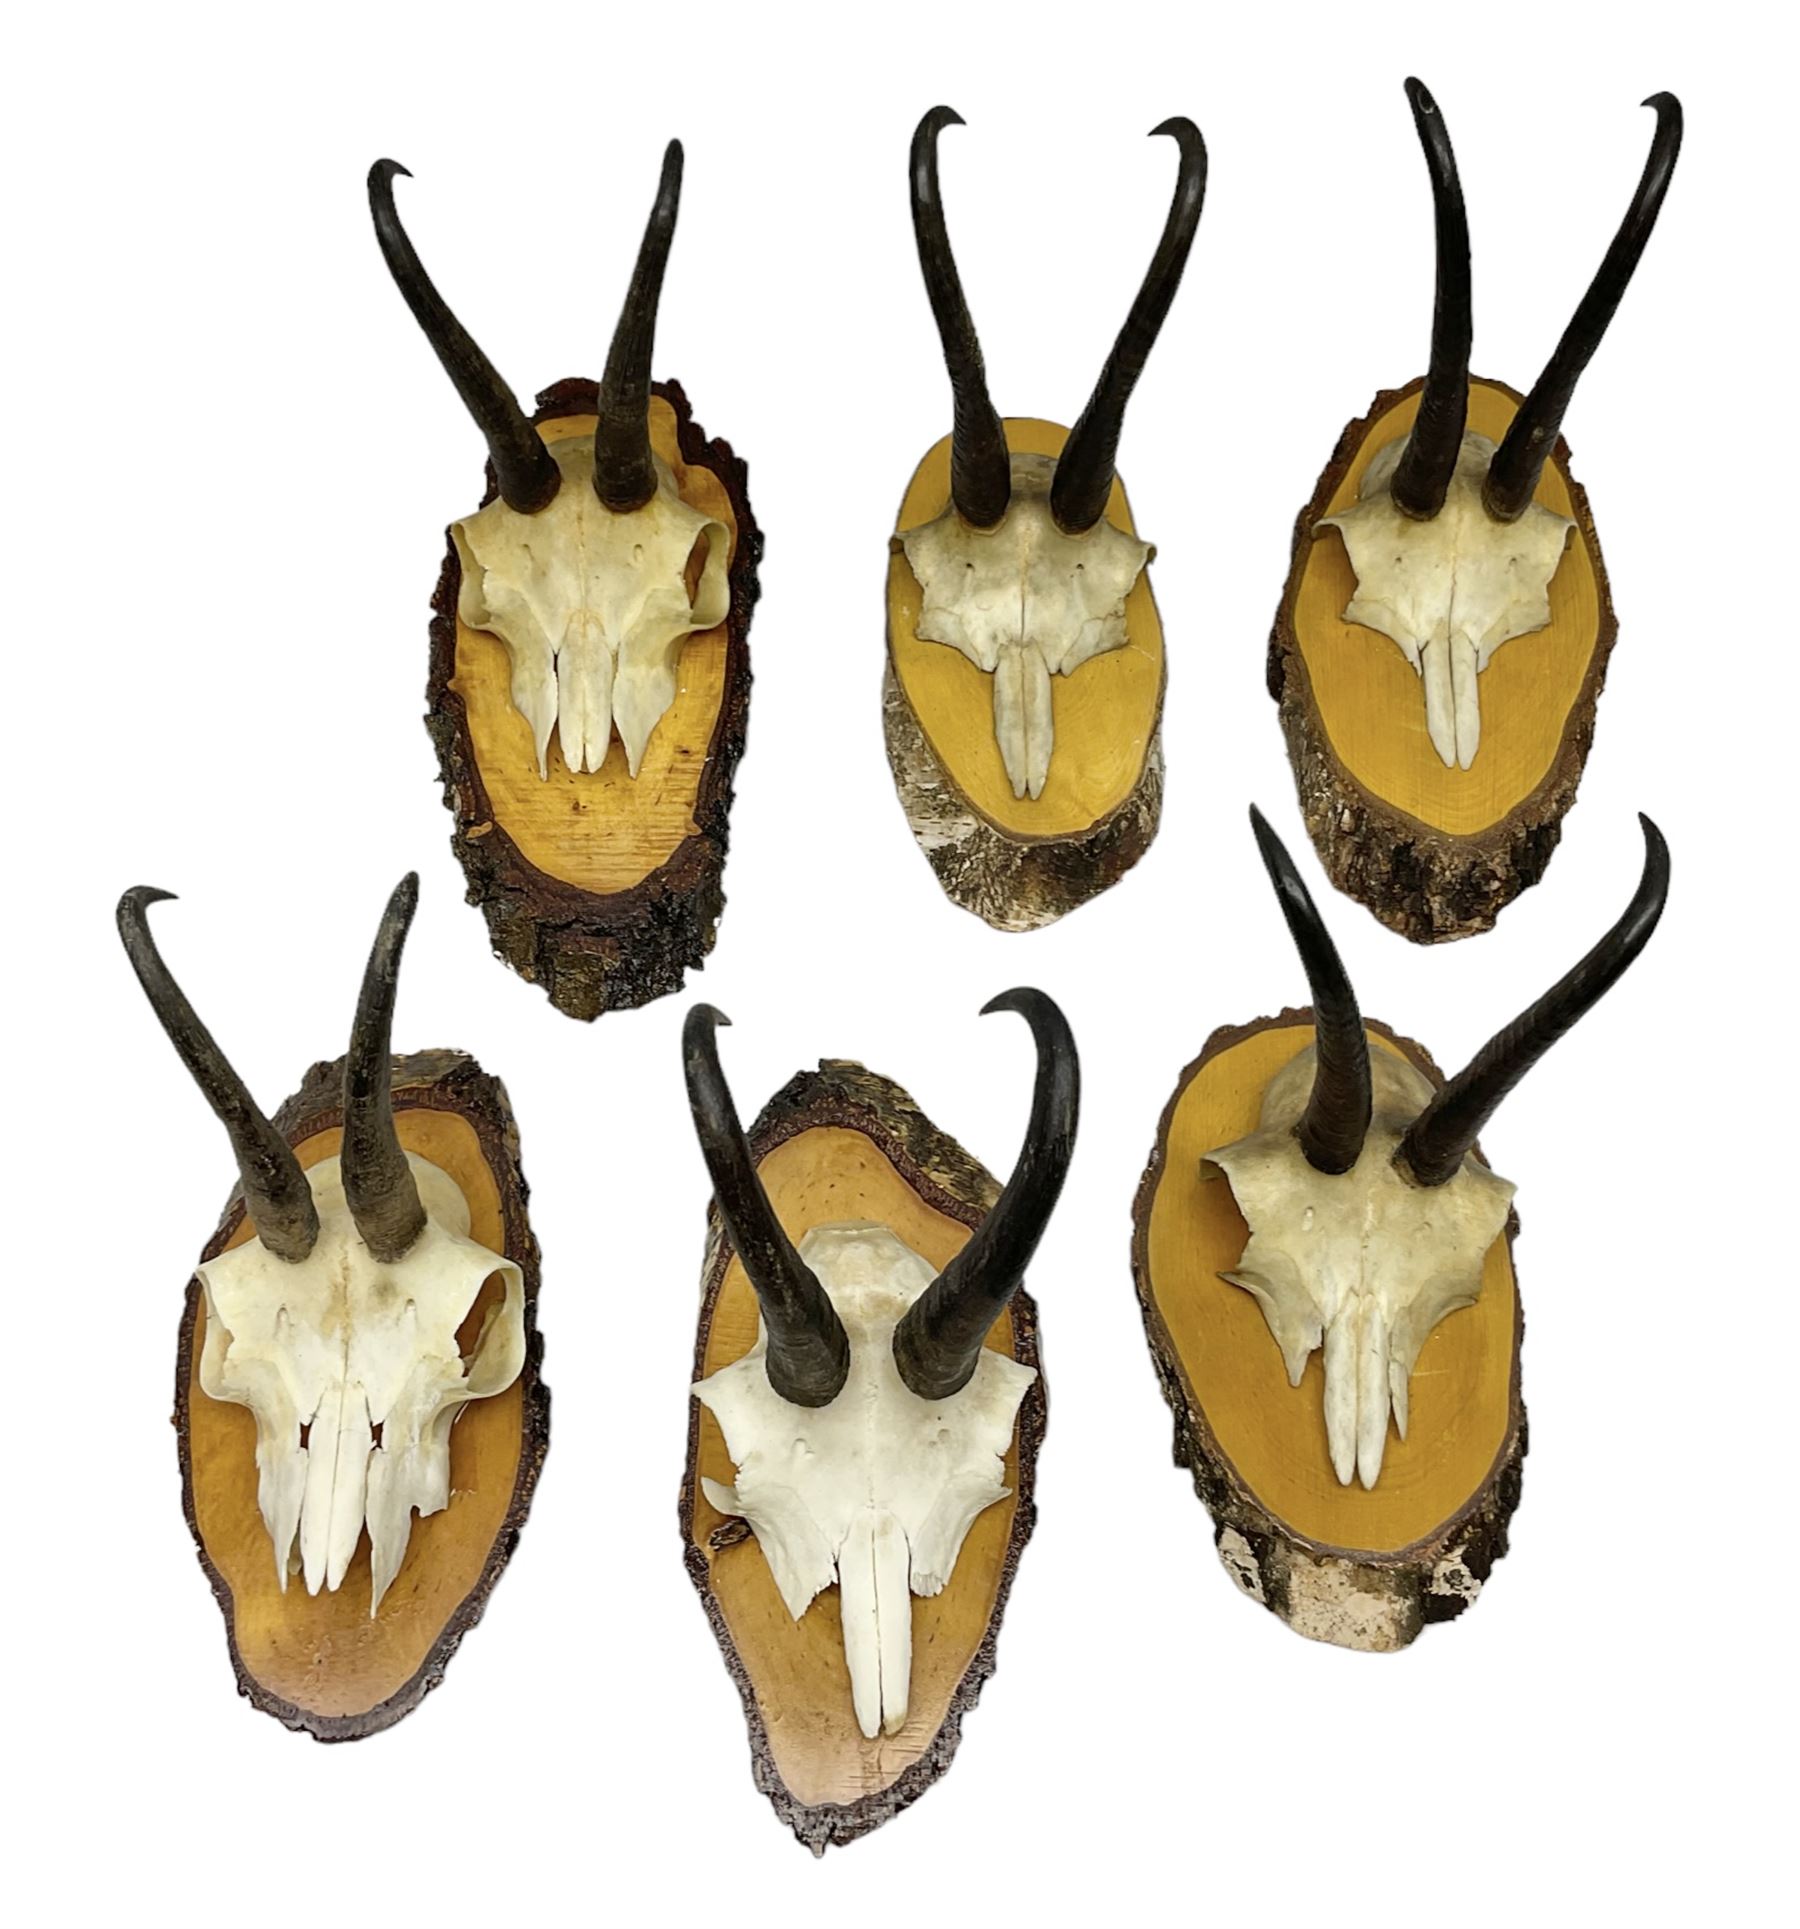 Antlers/Horns: Alpine Chamois (Rupicapra rupicapra)